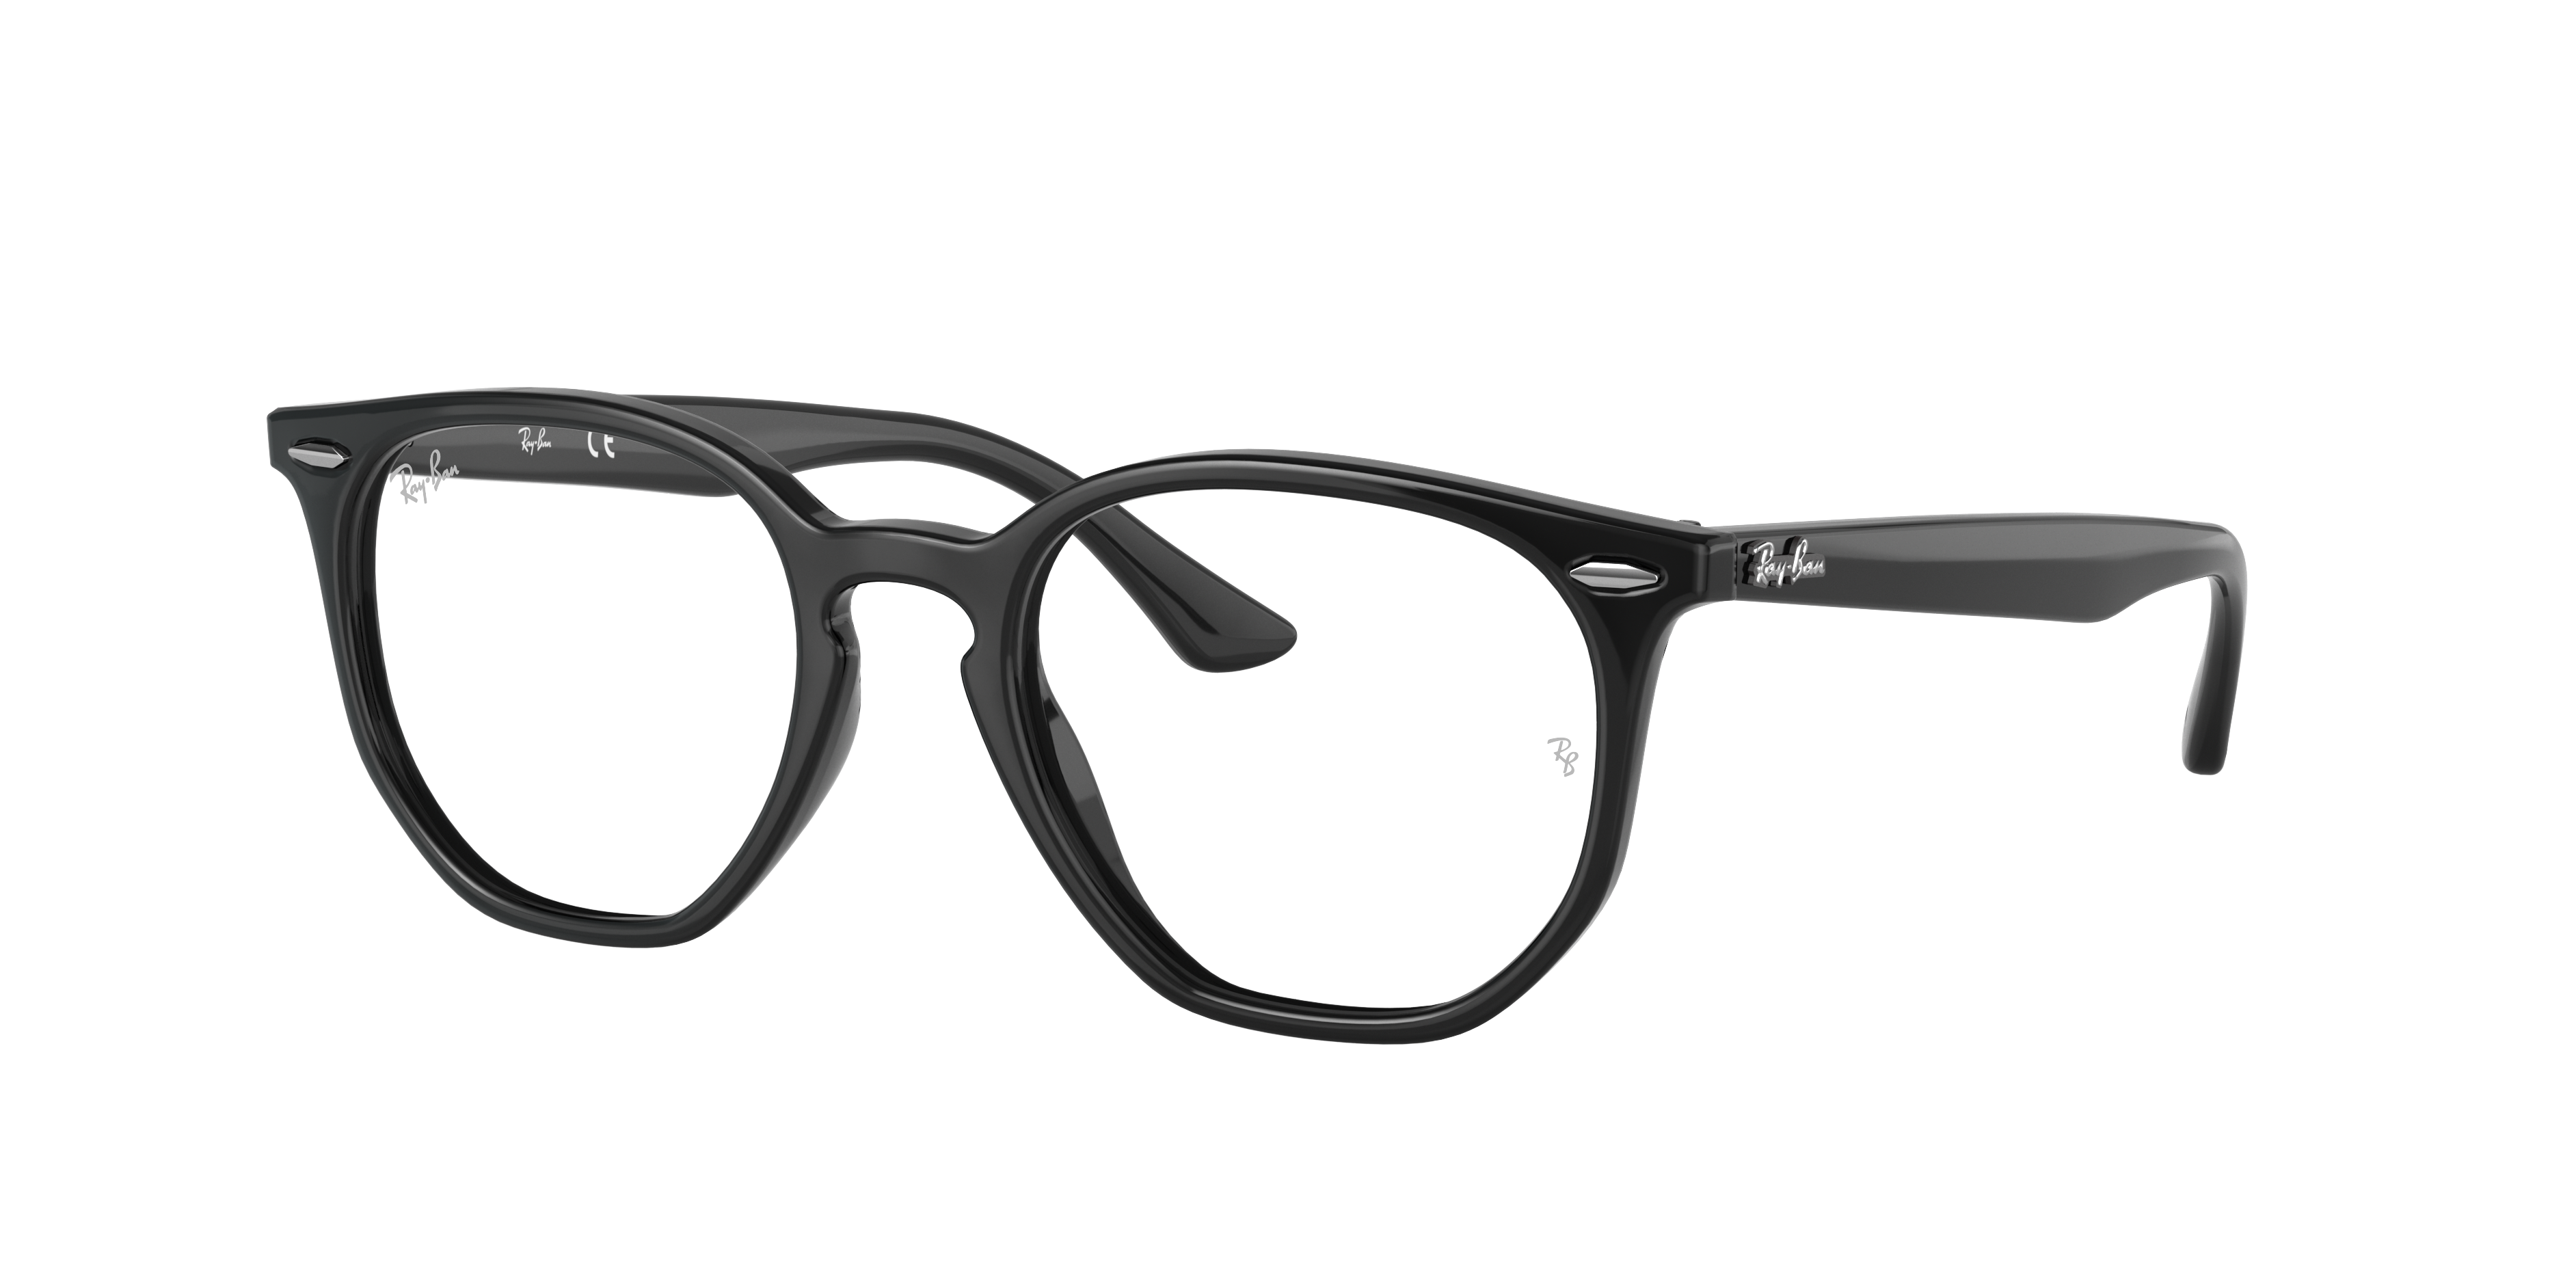 ray ban prescription sunglasses with logo uk